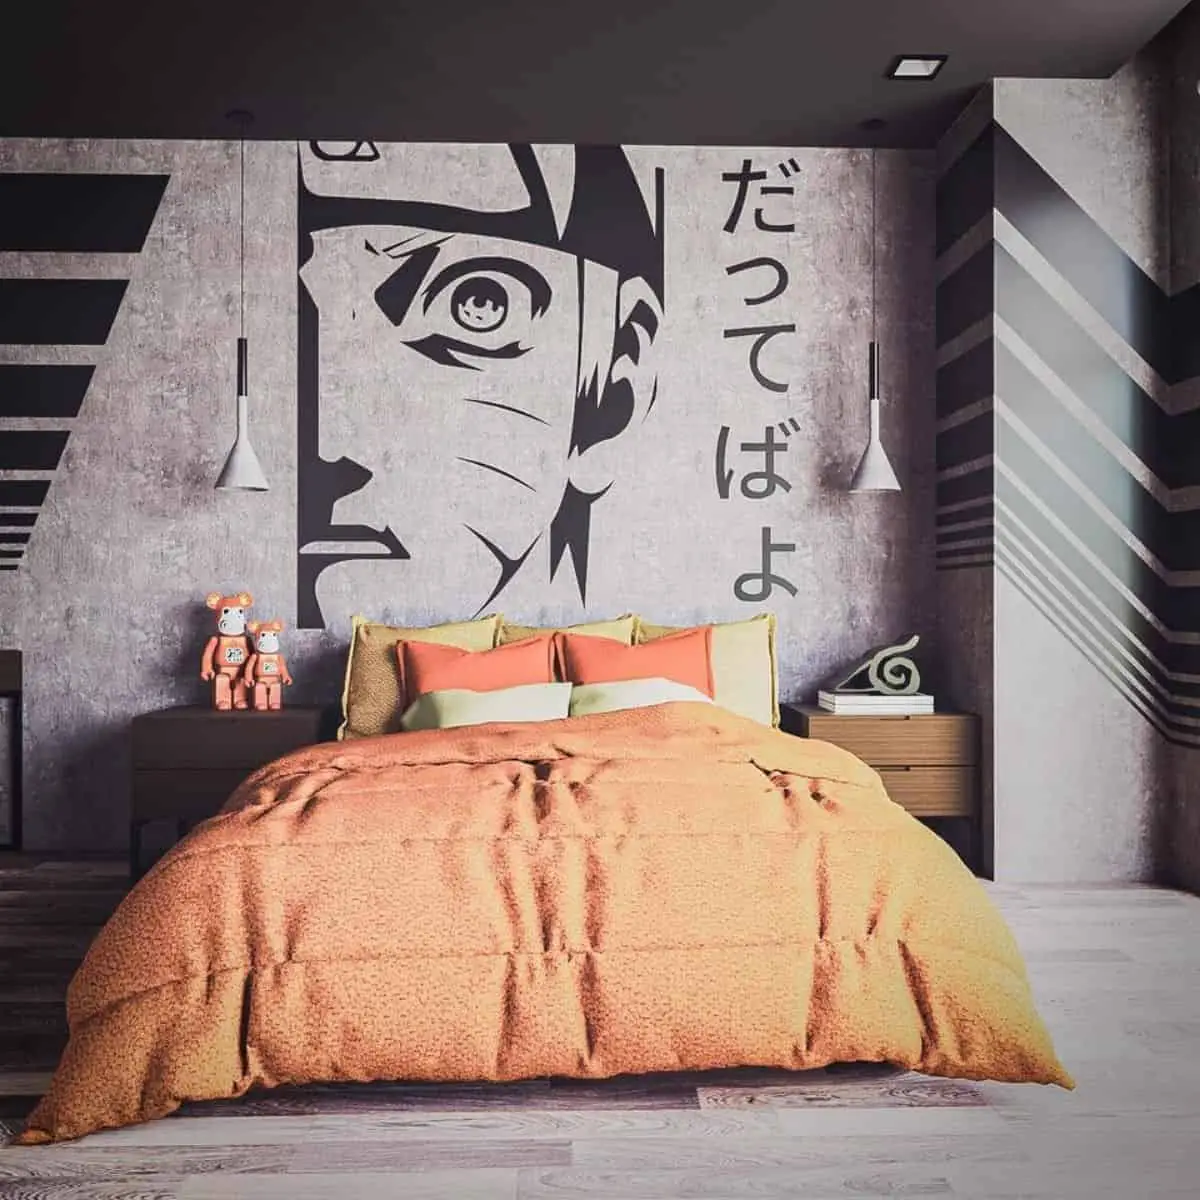 11 Naruto Bedroom Ideas For A DIY Room Decor Project!